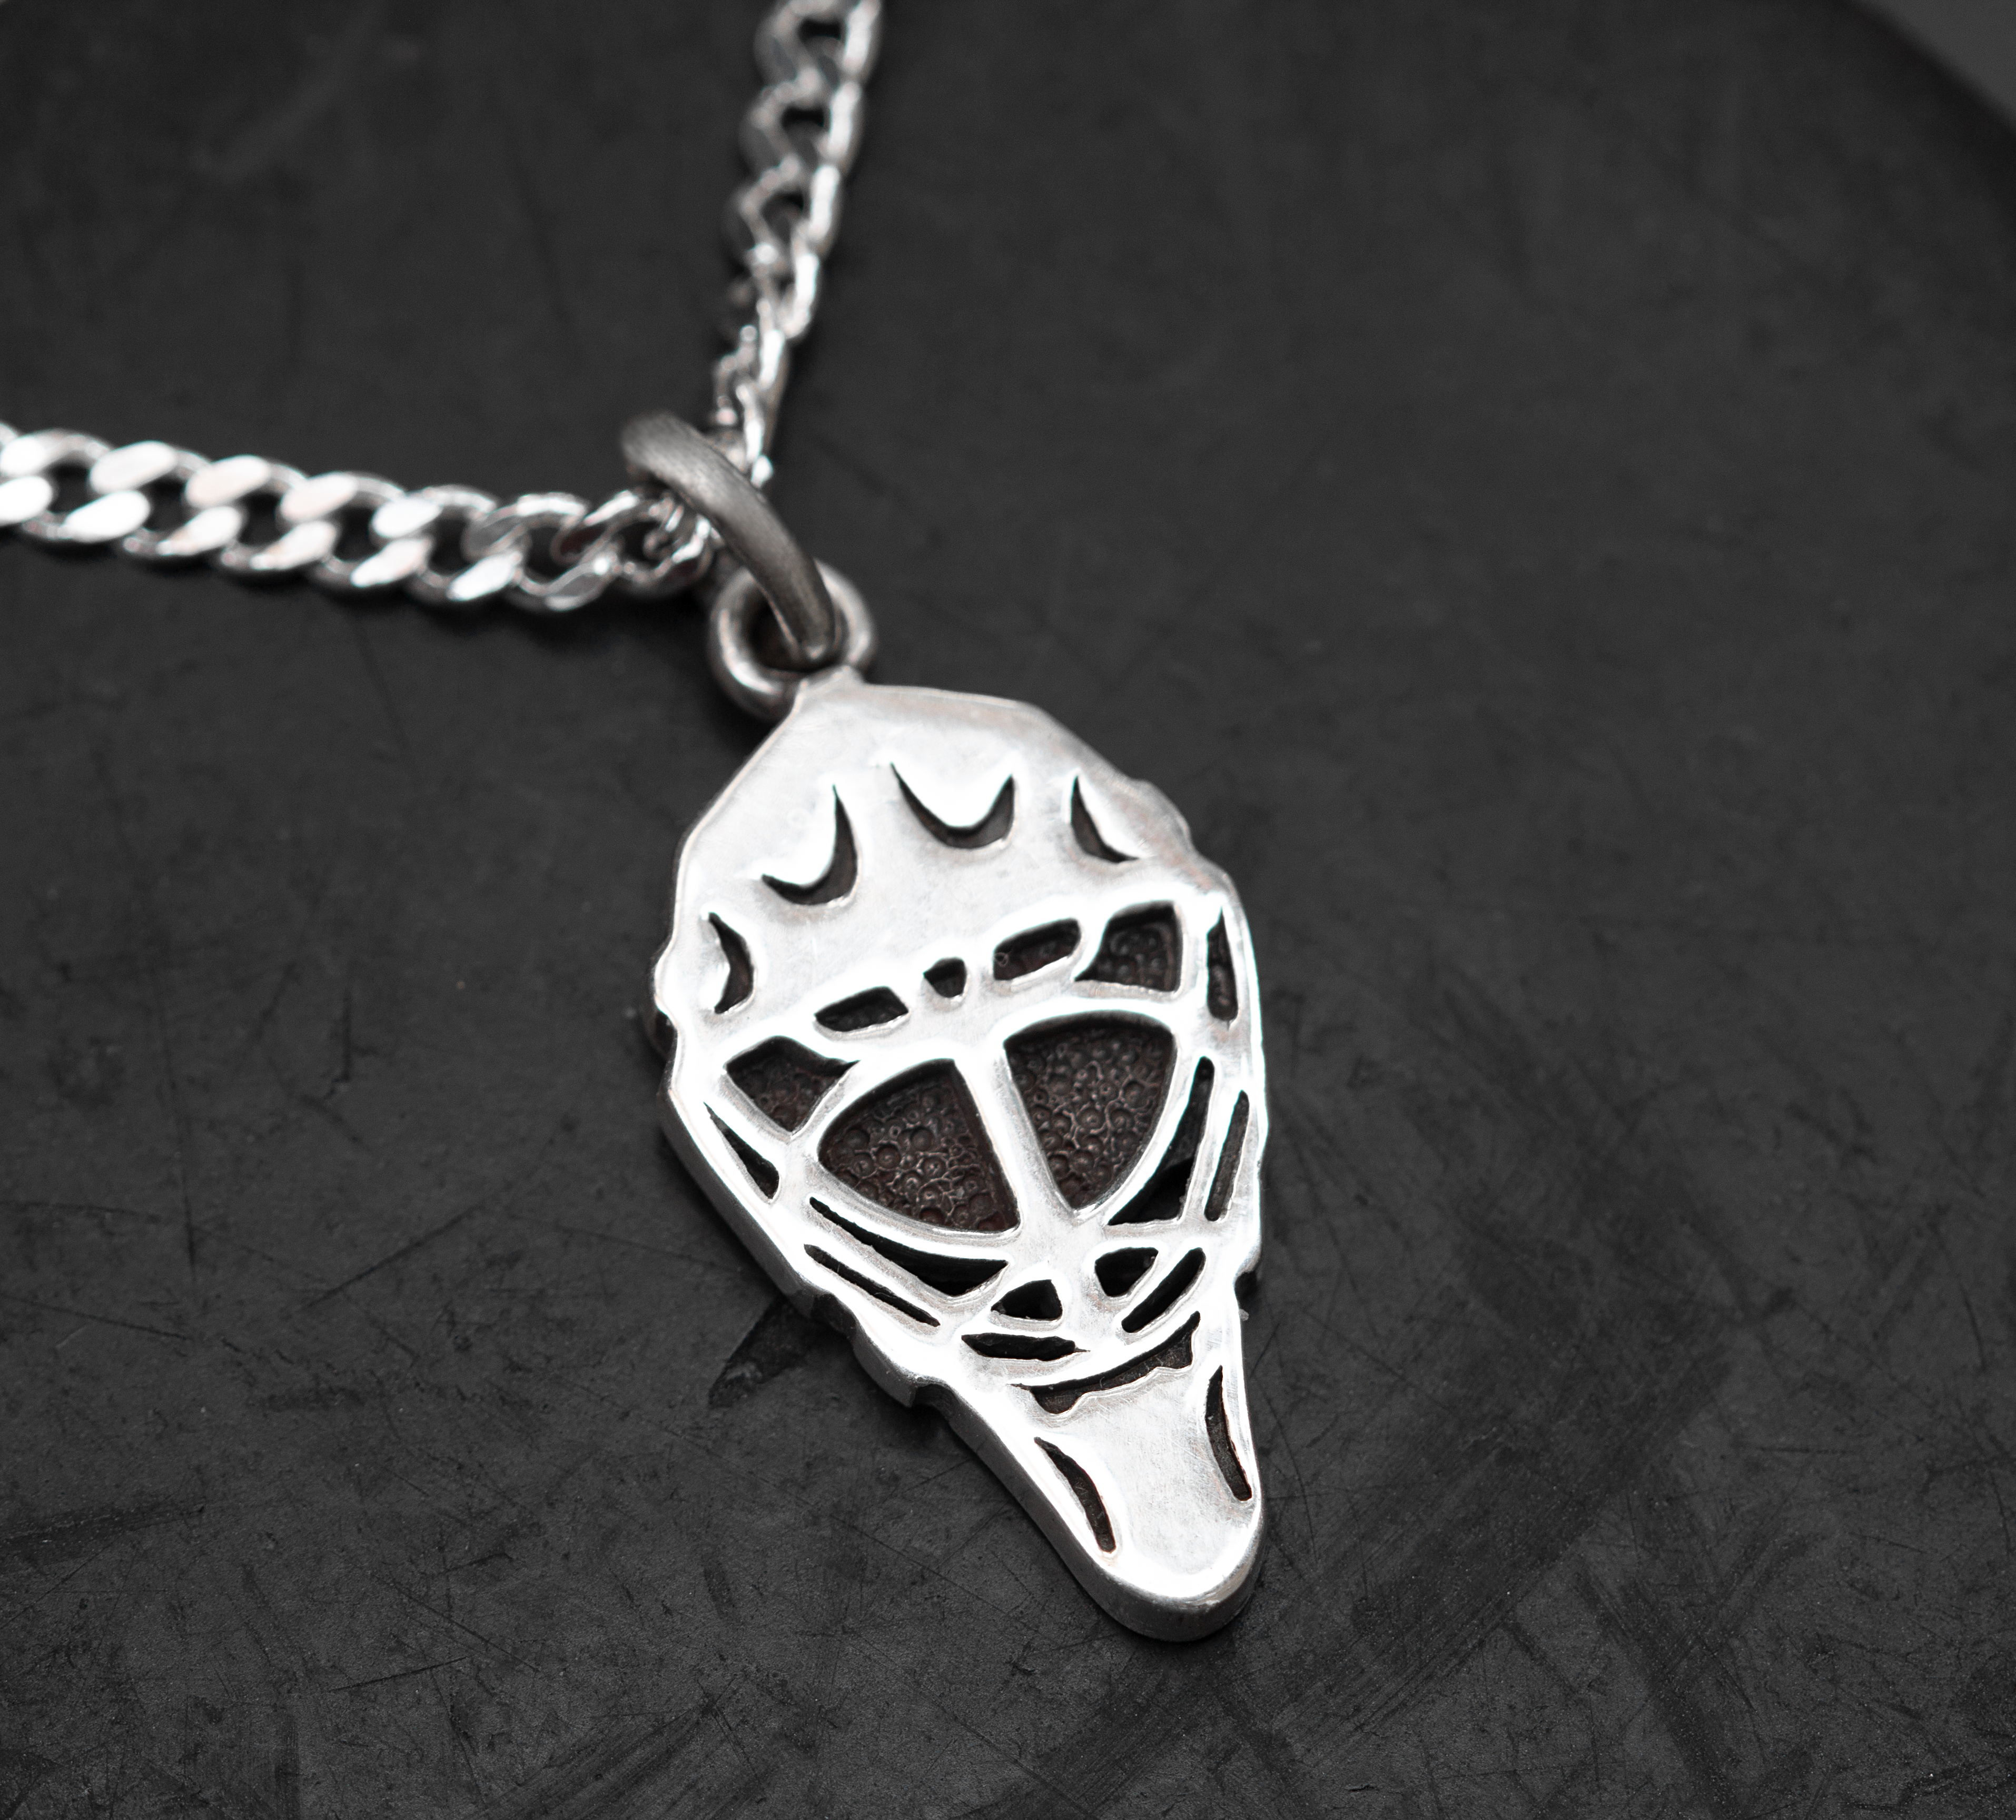 Personalized Sterling Silver Hockey Goalie Mask Pendant